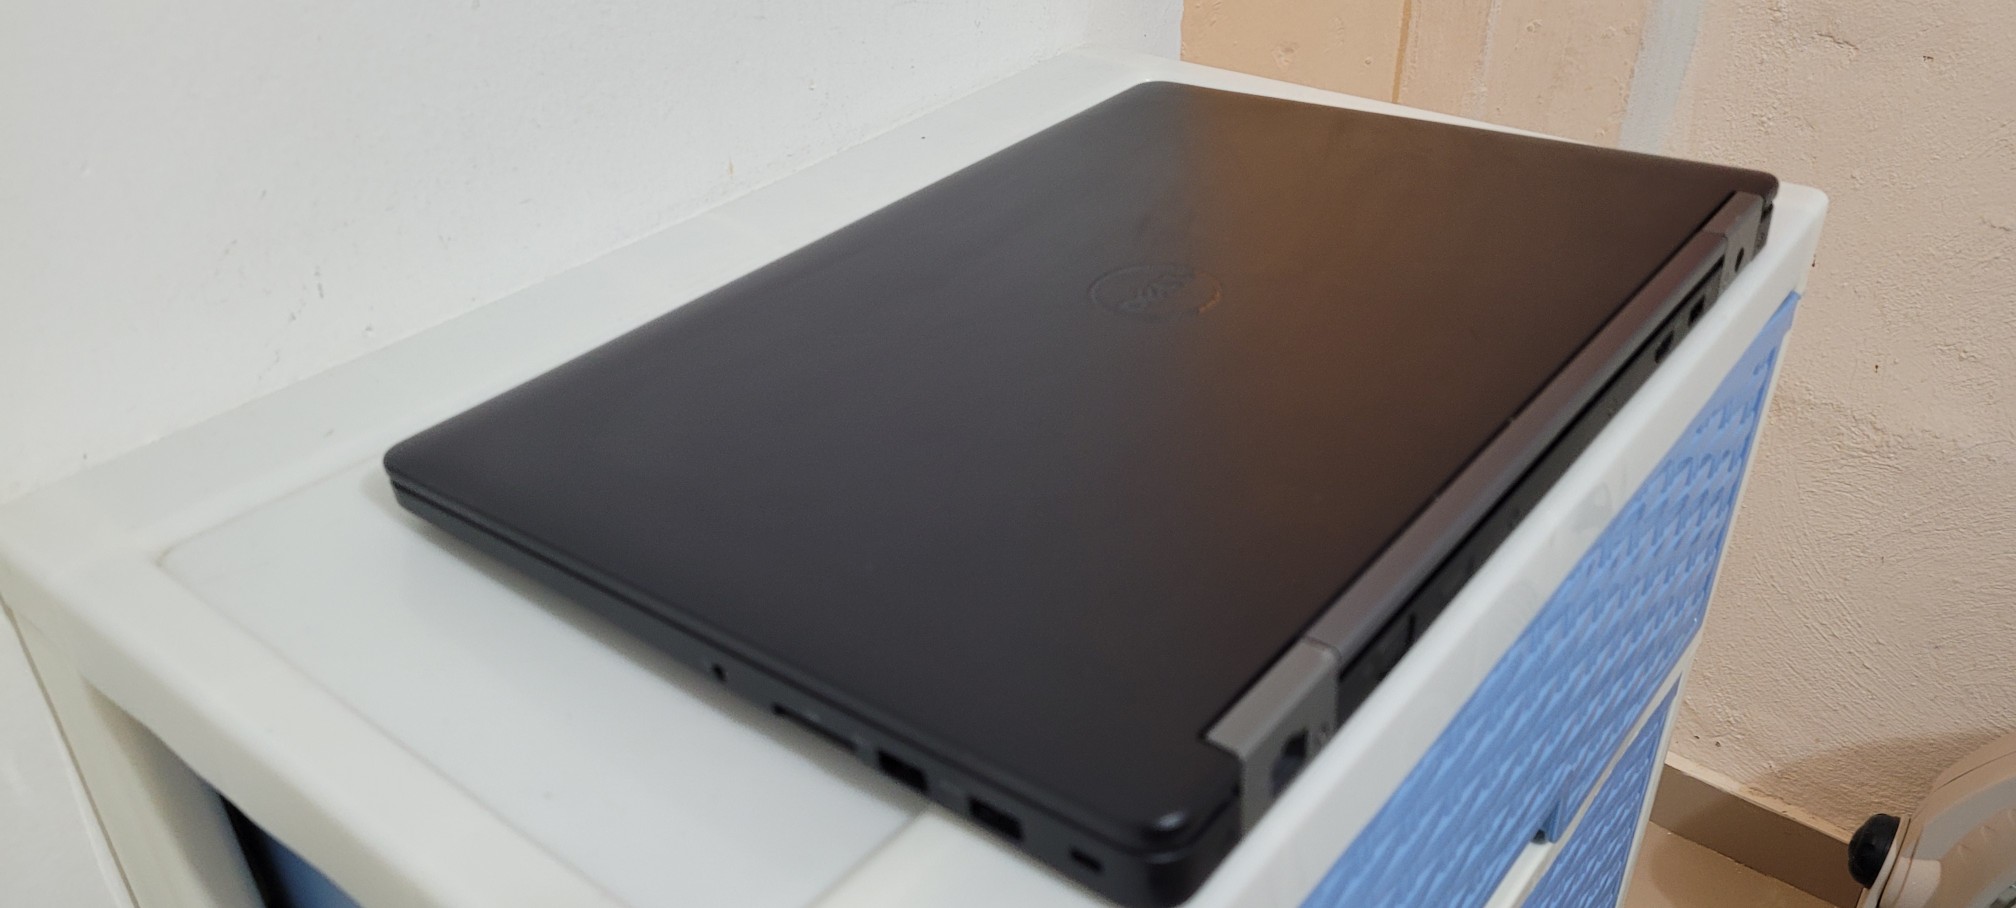 computadoras y laptops - Laptop Dell 17 Pulg Core i7 2.7ghz Ram 8gb Disco 1000gb Video 6gb 2